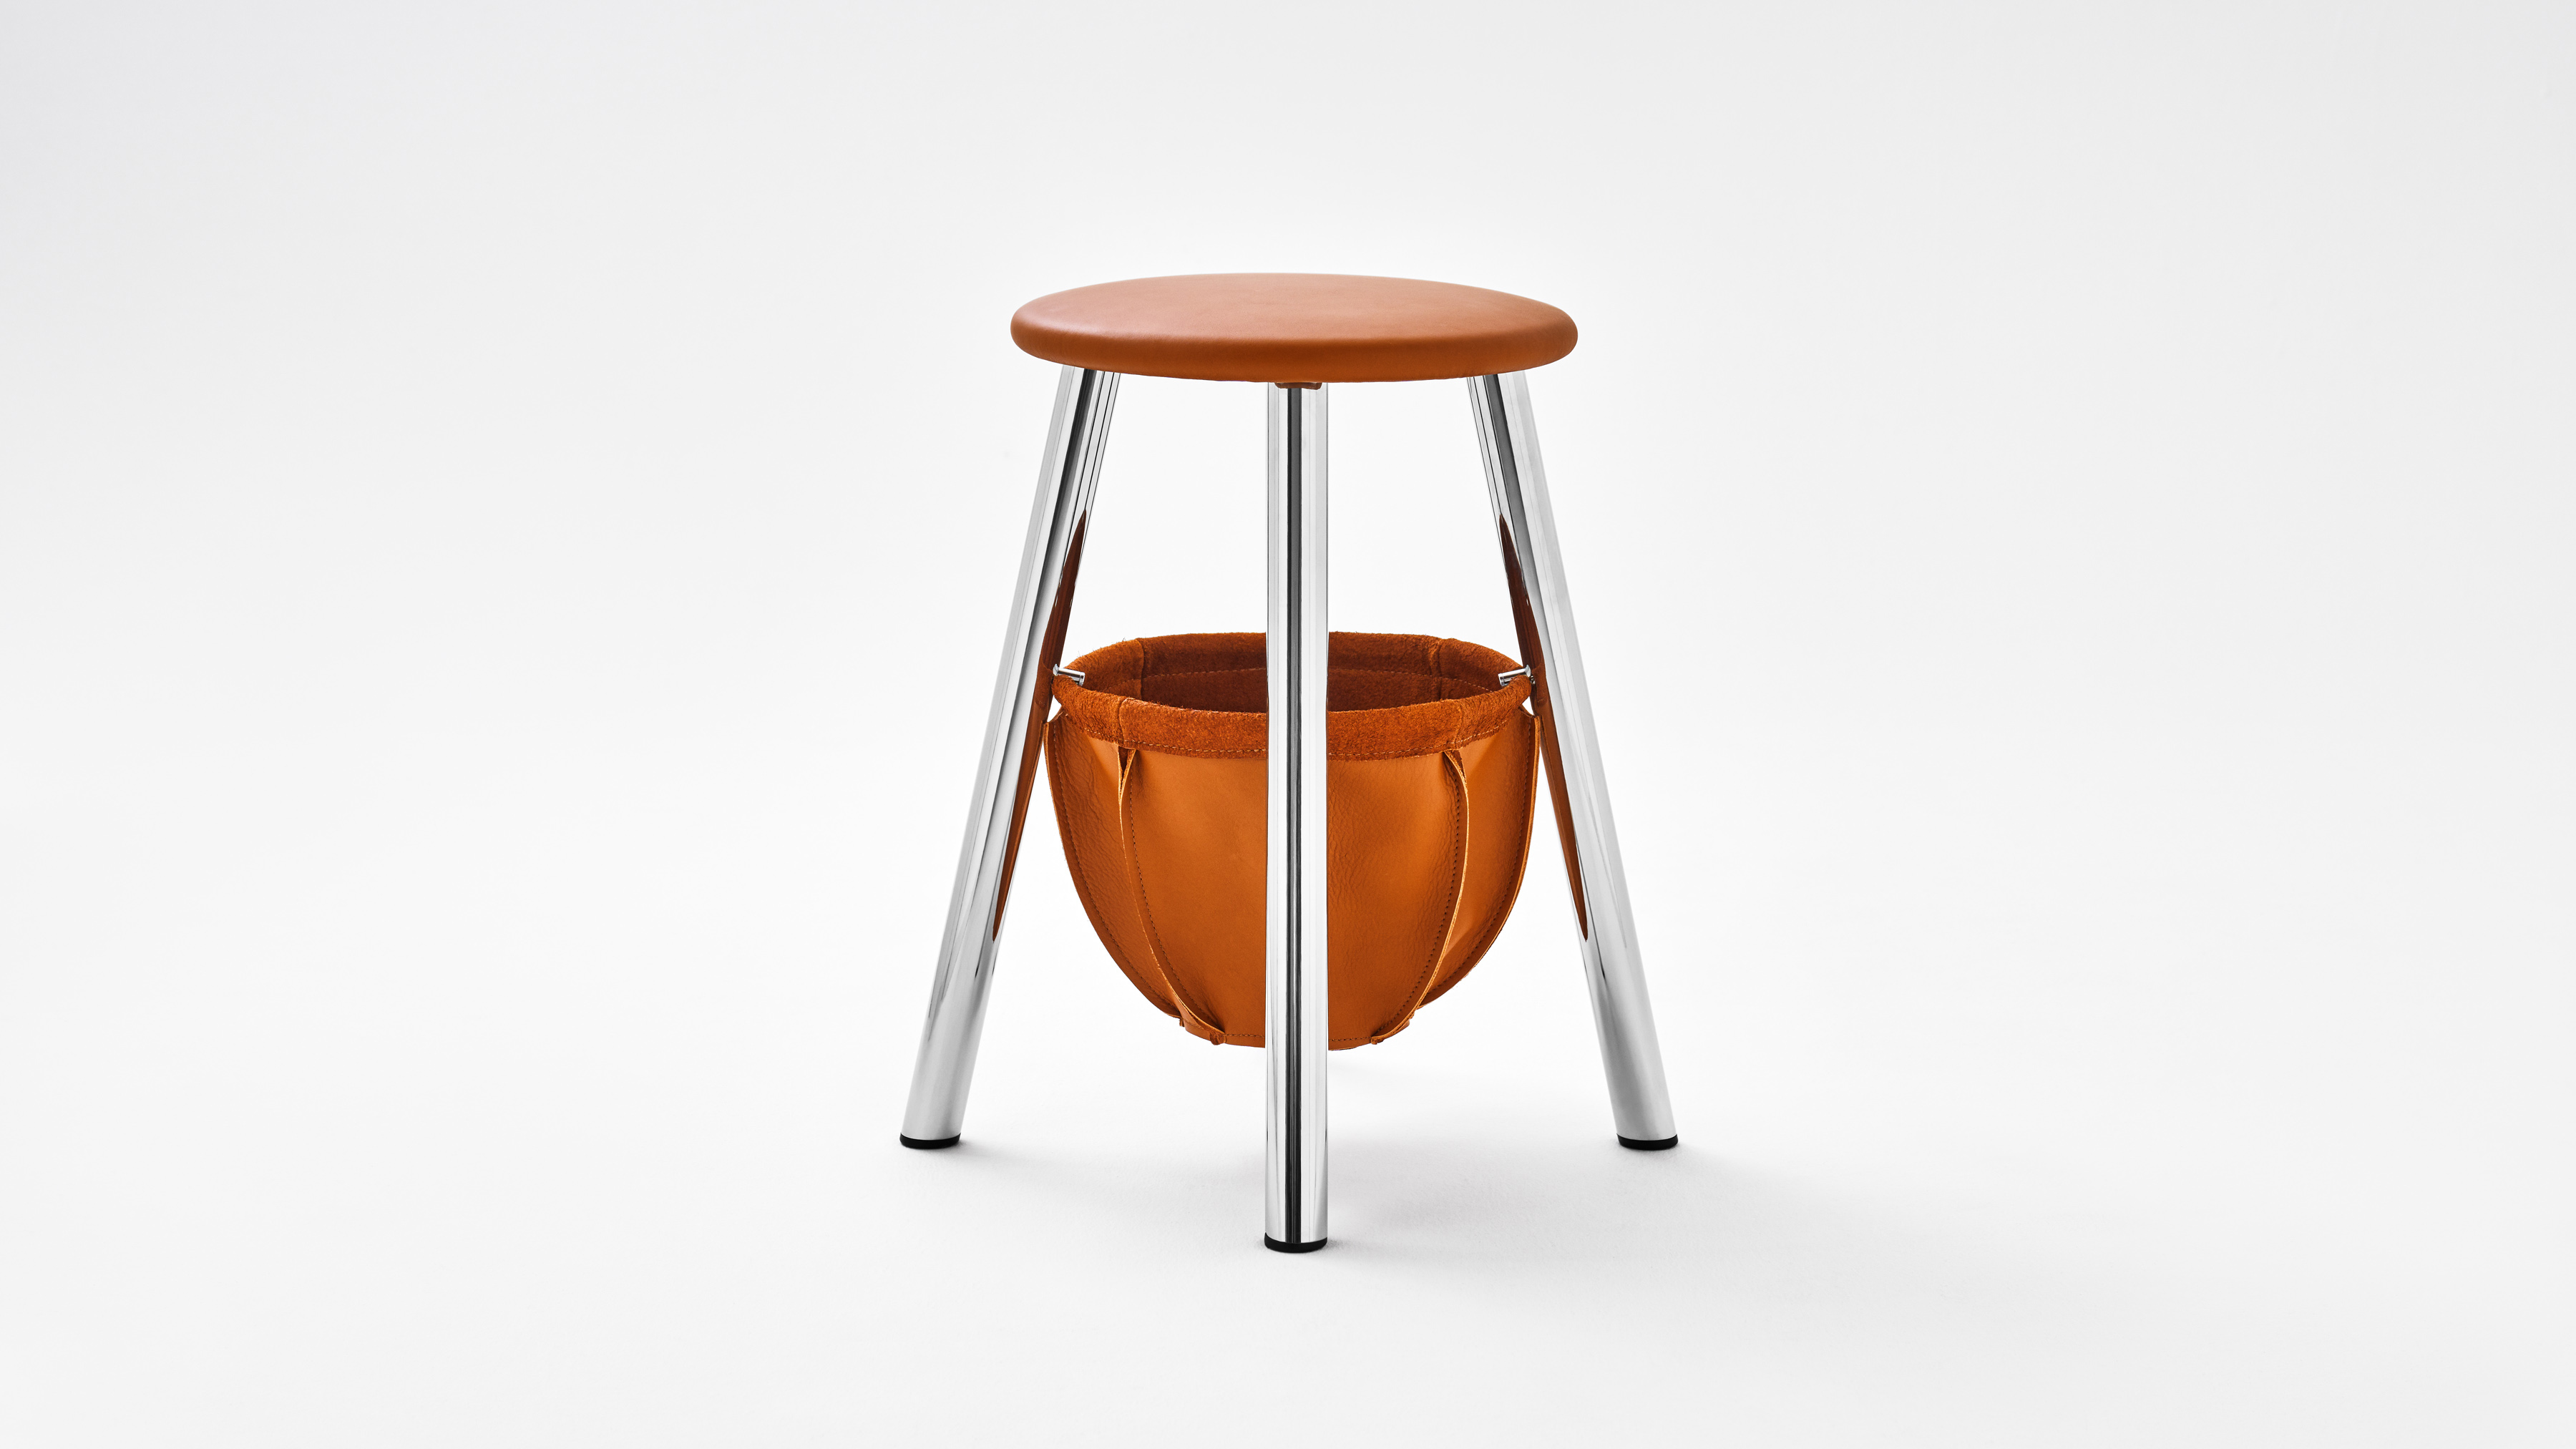 KON – Ideal small stools for entrances